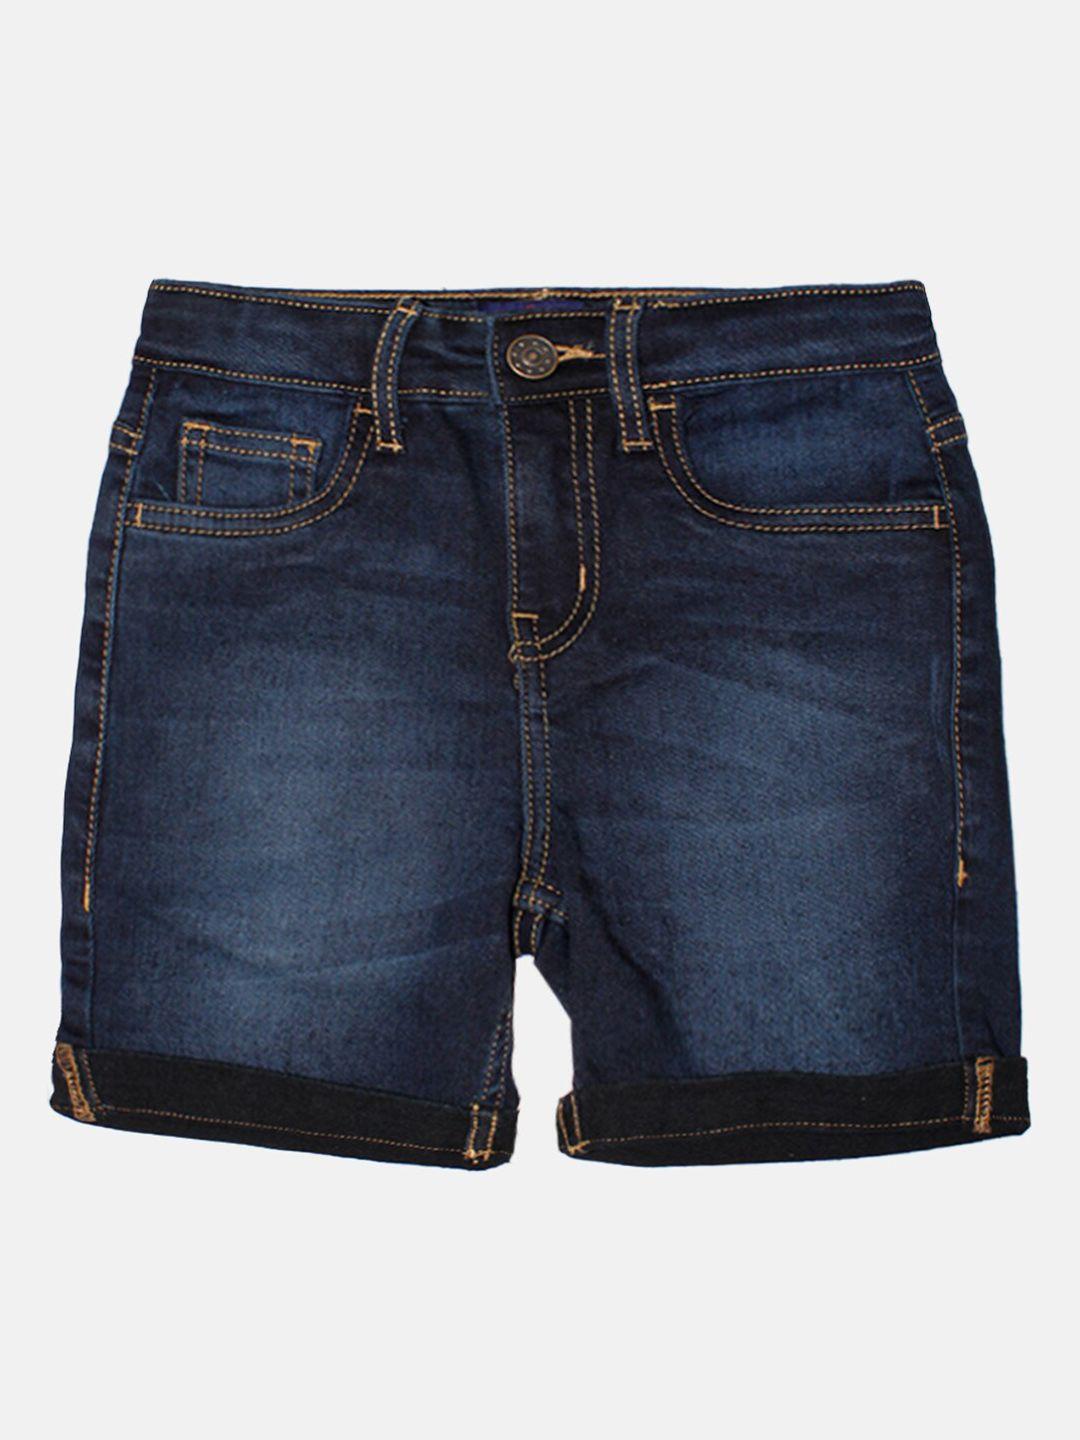 KiddoPanti Boys Washed Denim Shorts